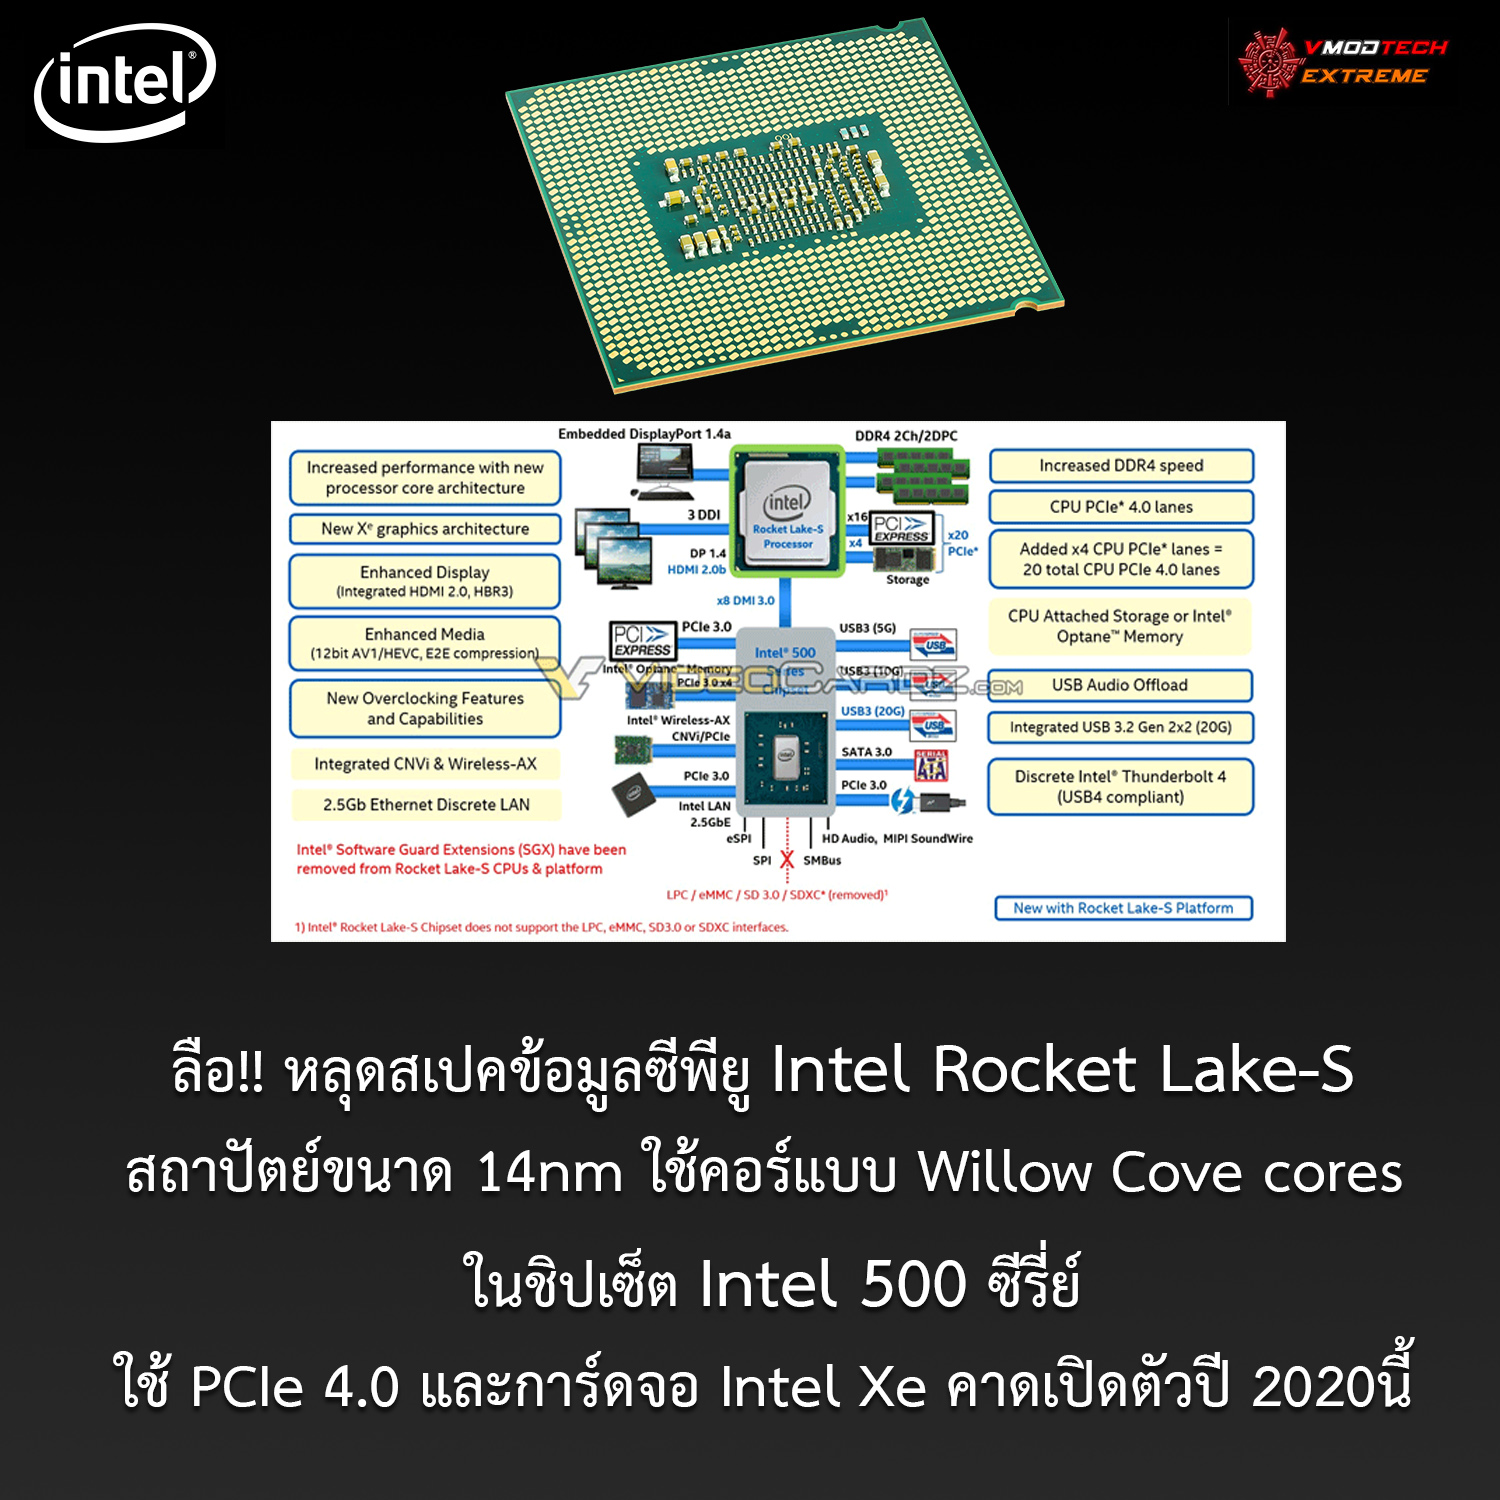 intel rocket lake s ลือ!! หลุดสเปคข้อมูลซีพียู Intel Rocket Lake S ในชิปเซ็ต Intel 500 ซีรี่ย์ใช้ PCIe 4.0 และการ์ดจอ Intel Xe คาดเปิดตัวปี 2020นี้ 